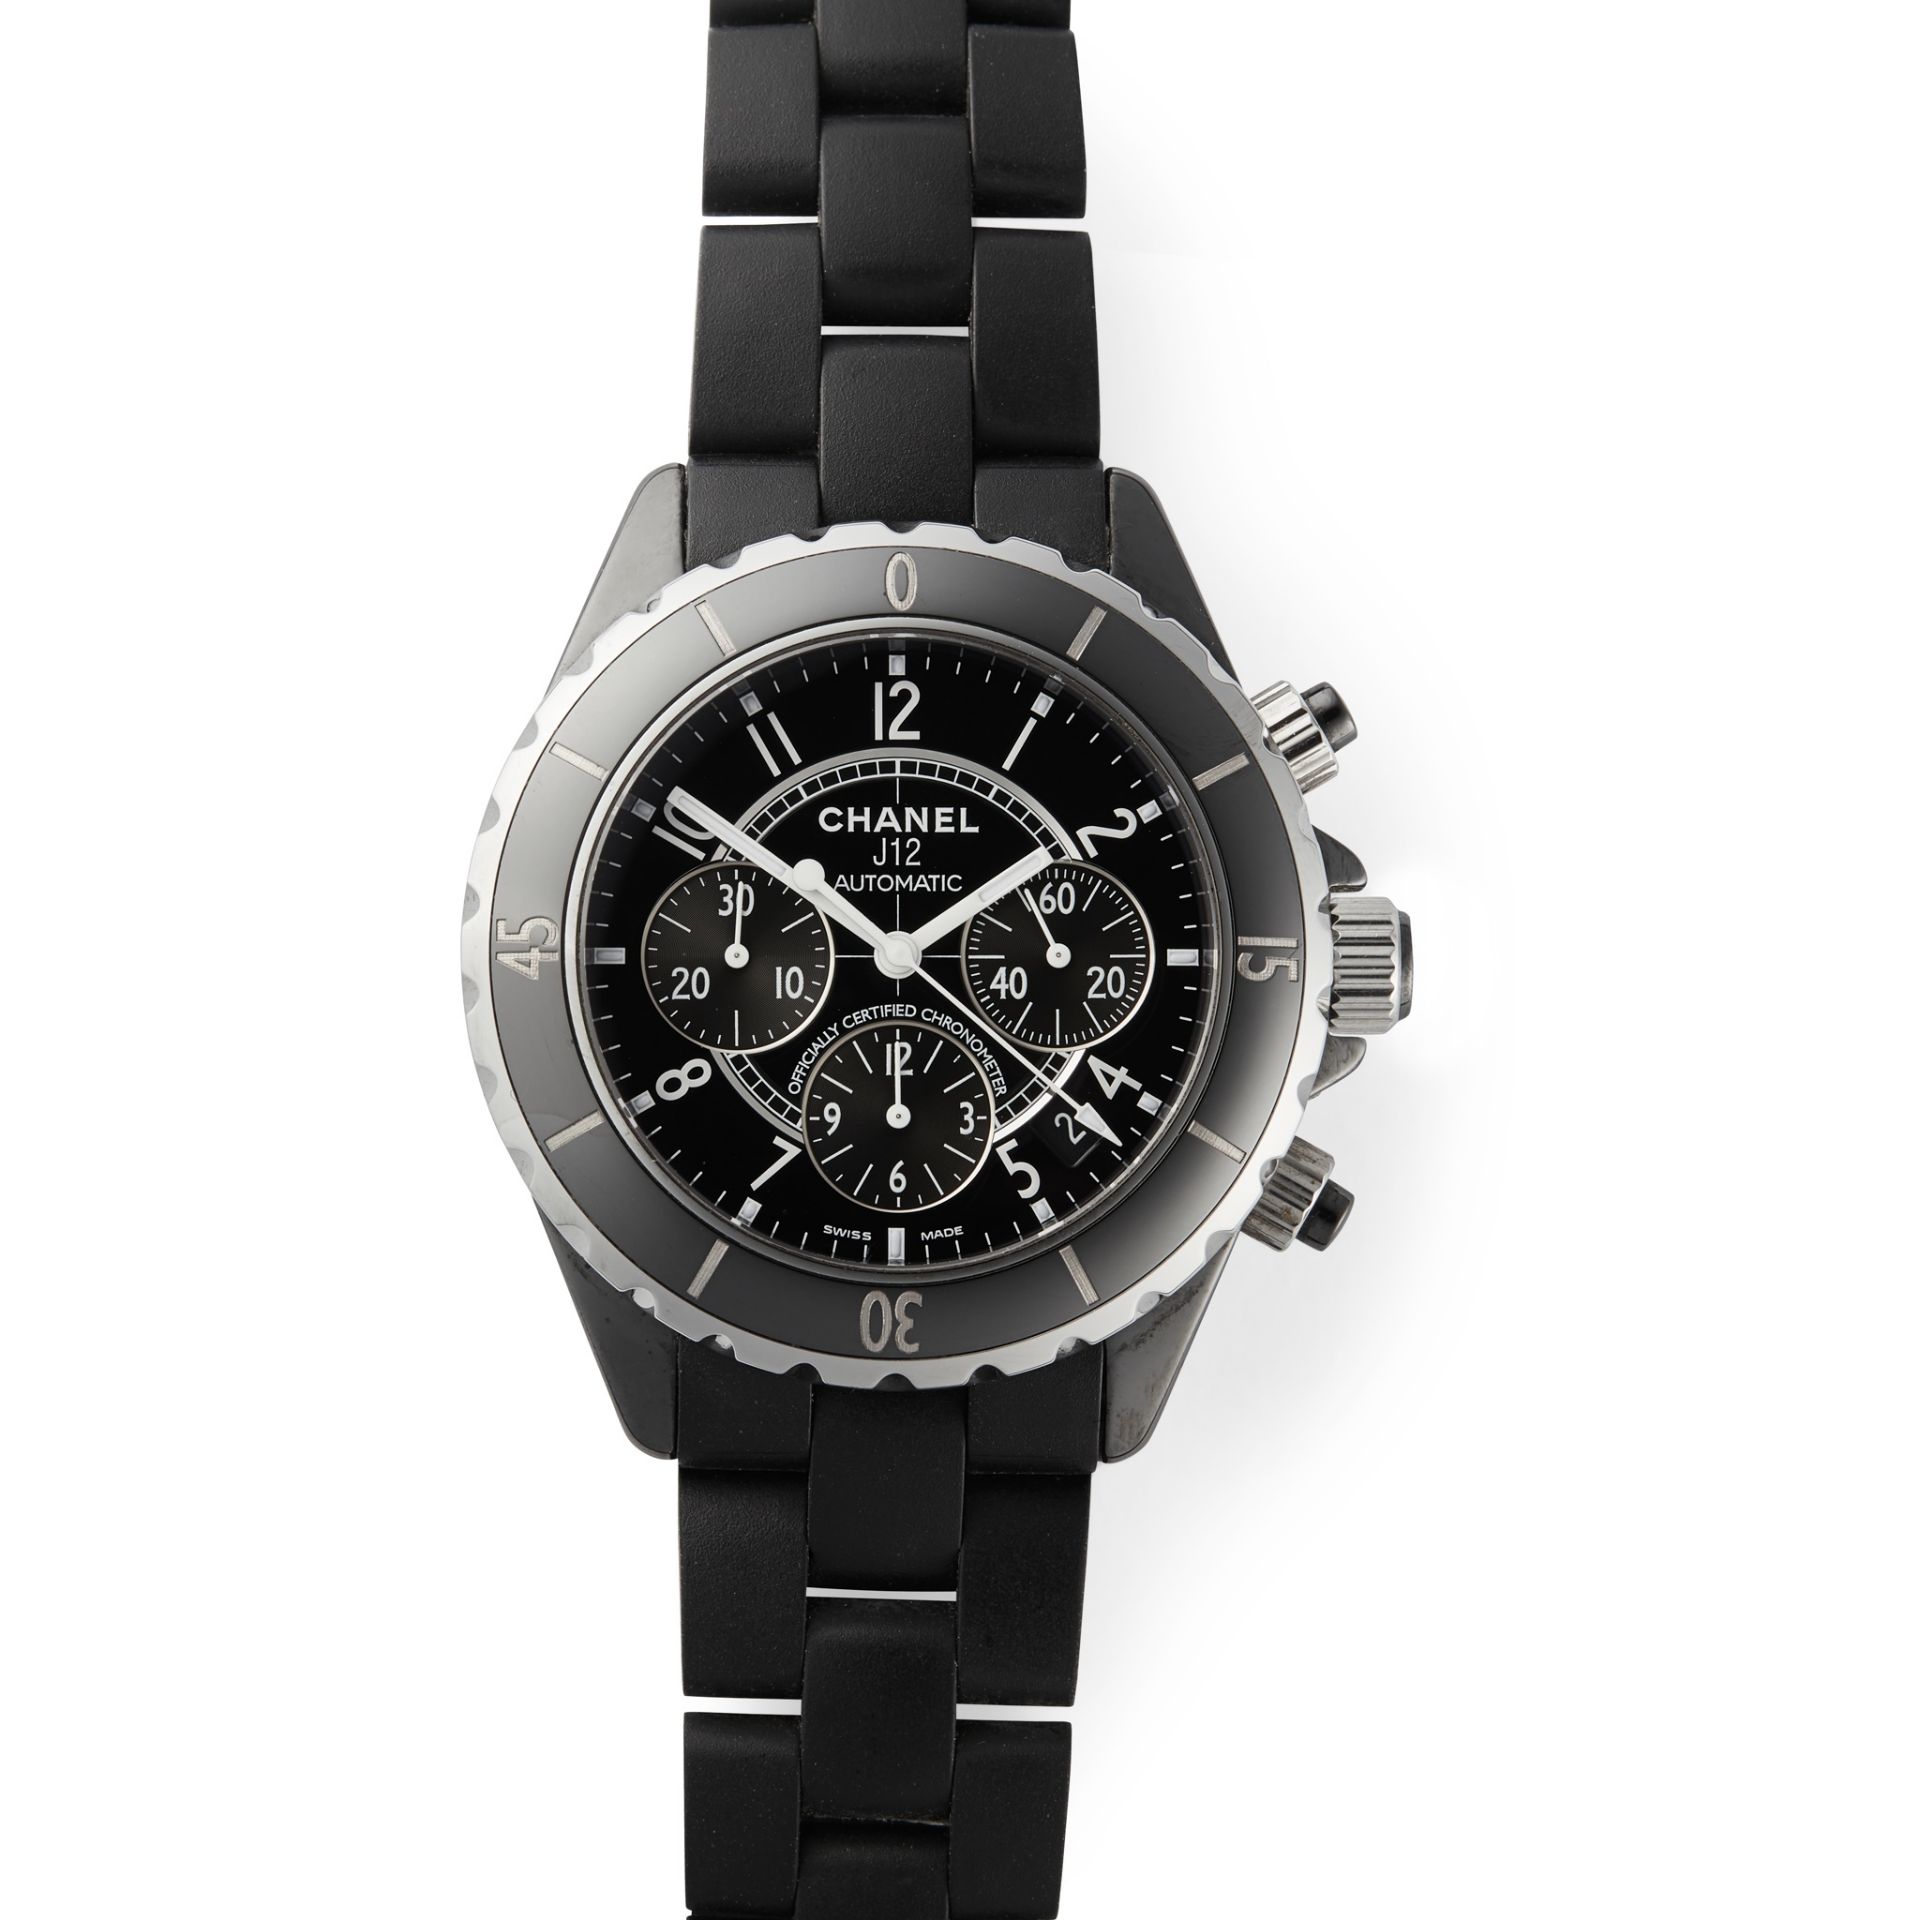 Chanel: A gentleman's chronograph wrist watch